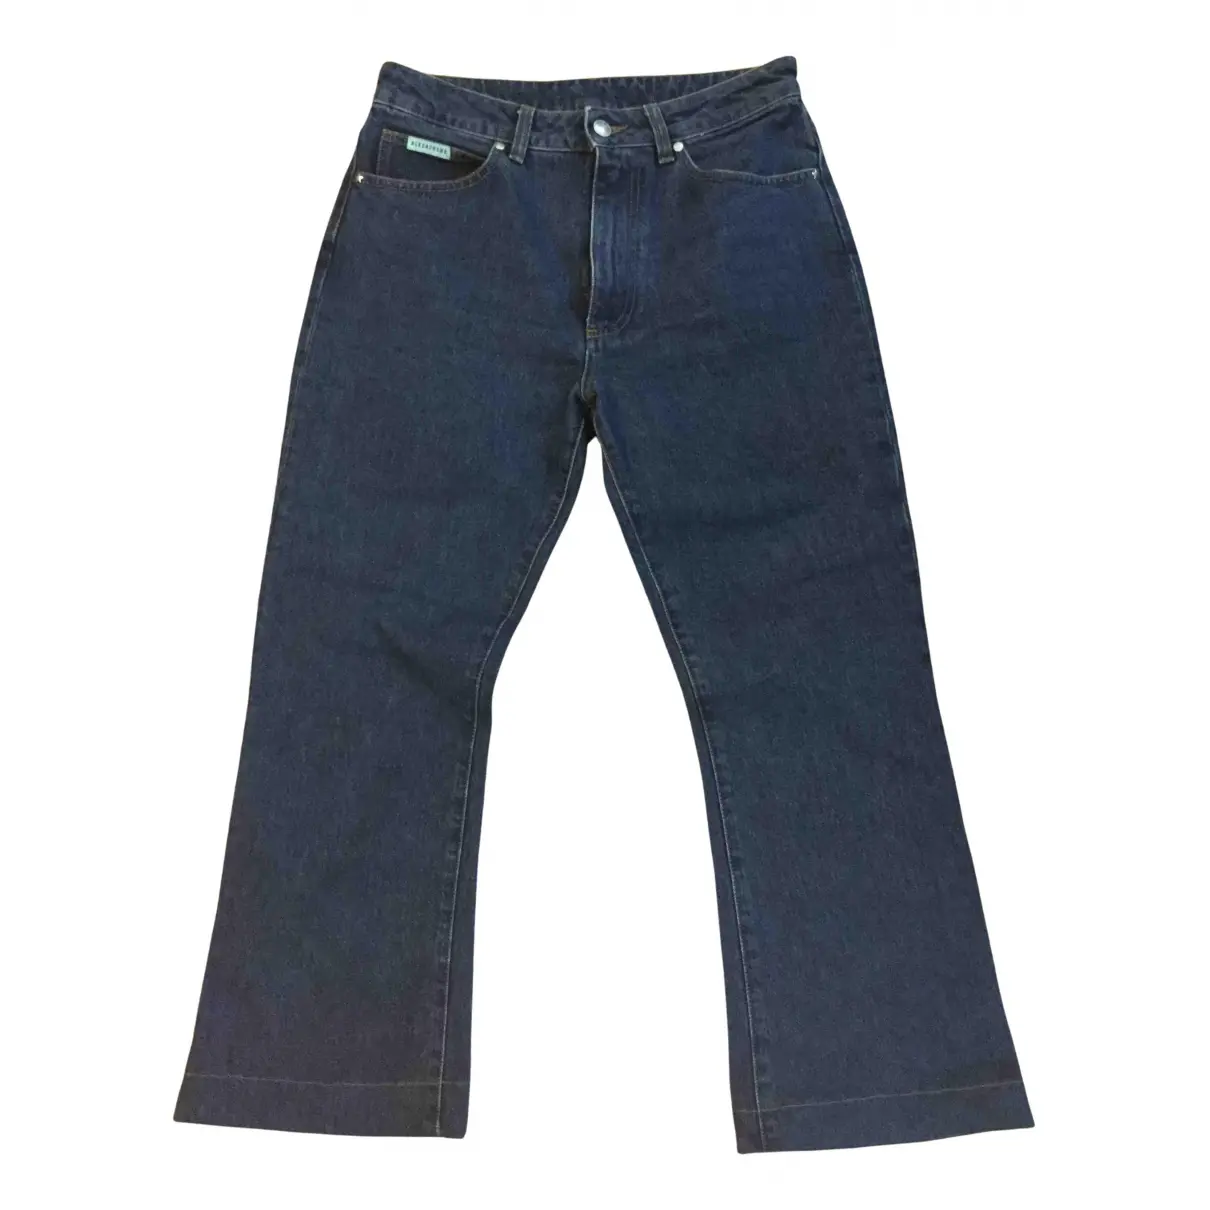 Blue Cotton Jeans Alexa Chung